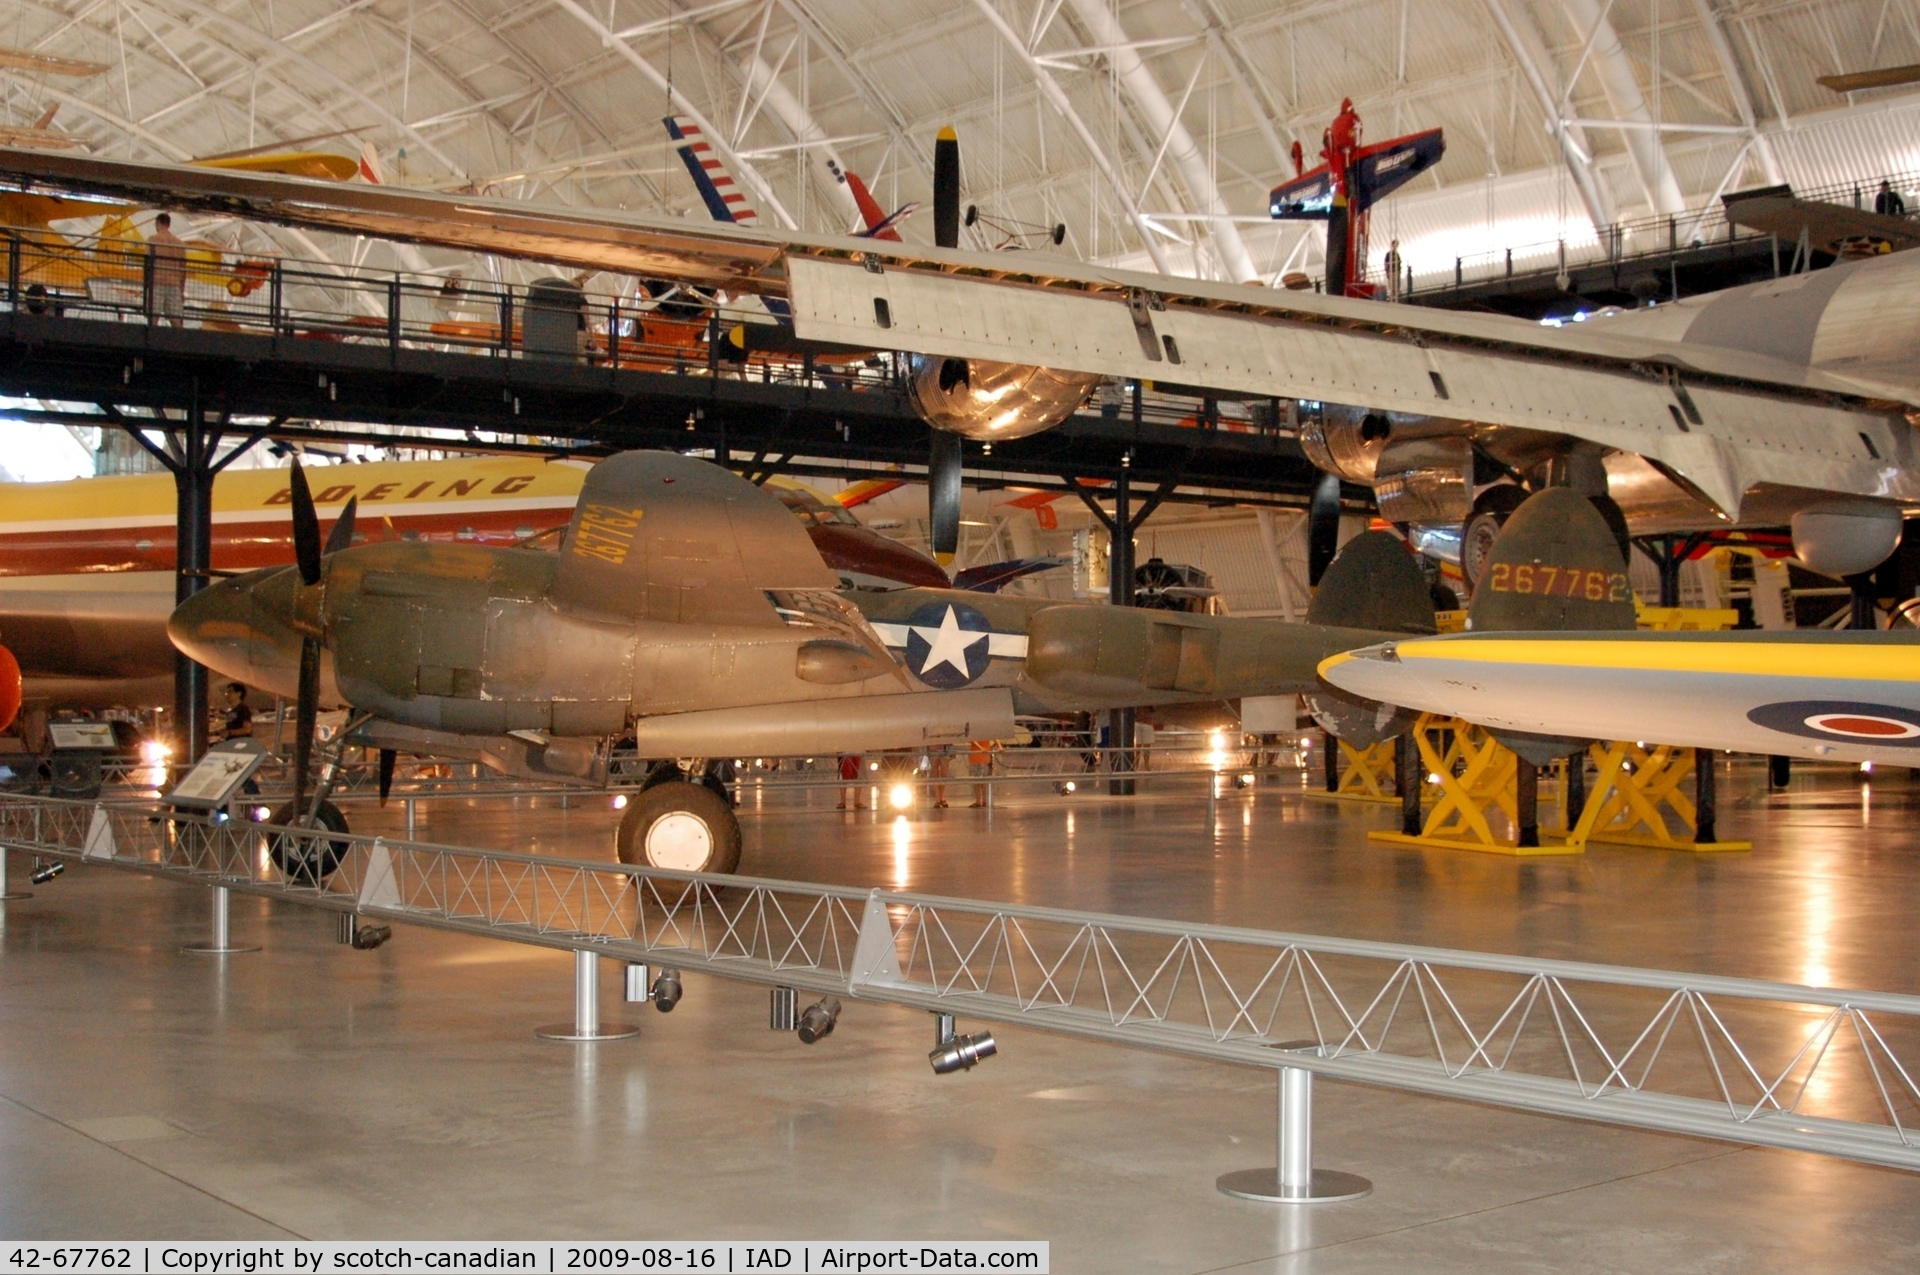 42-67762, Lockheed P-38J Lightning C/N 2273, Lockheed P-38J-10-LO Lightning at the Steven F. Udvar-Hazy Center, Smithsonian National Air and Space Museum, Chantilly, VA